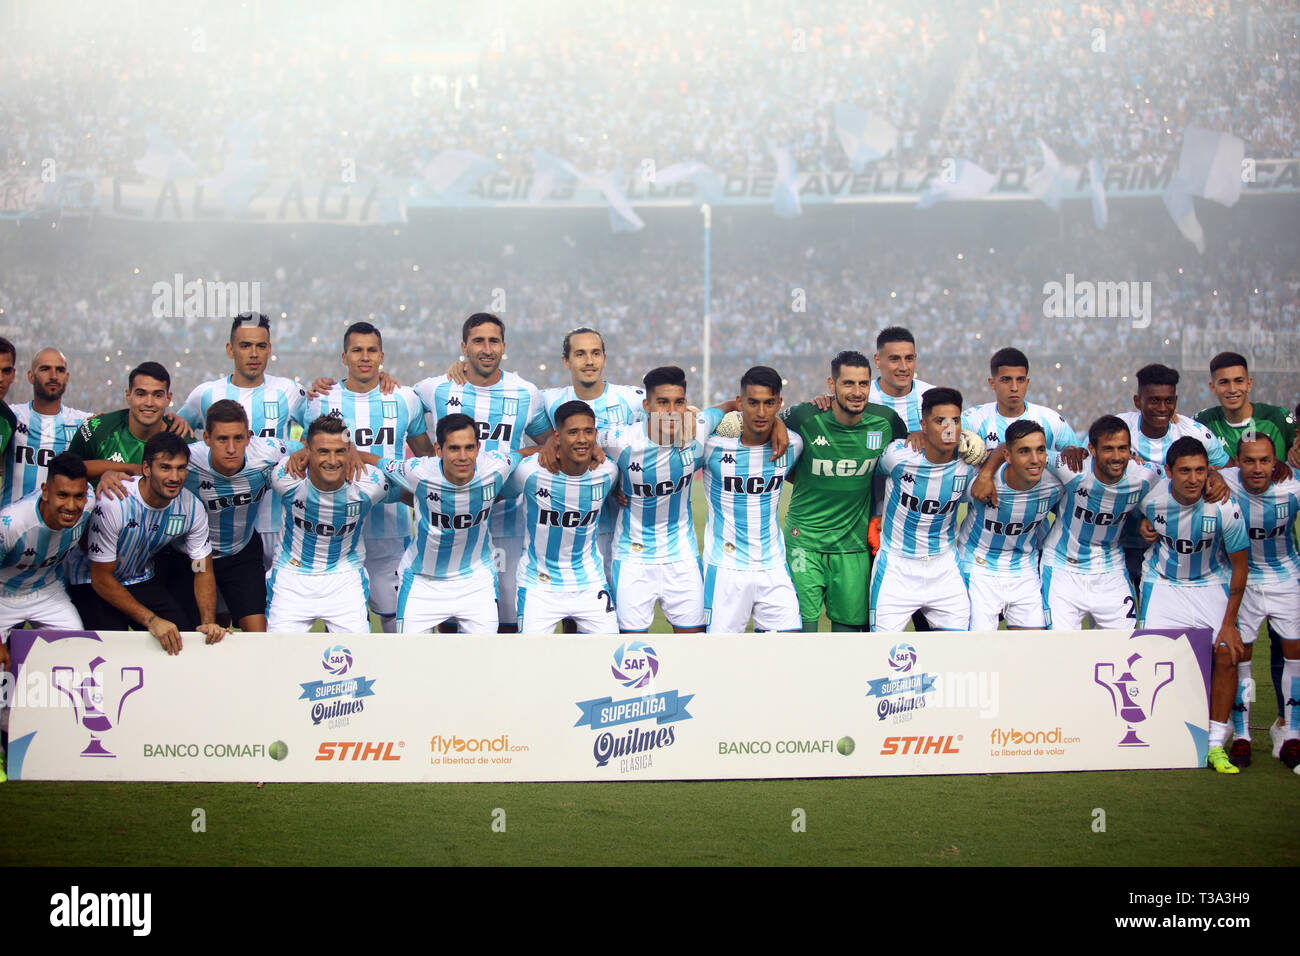 Buenos Aires, Argentina - April 07, 2019: Racing team formation in the Juan Domingo Peron Stadium in Buenos Aires, Argentina Stock Photo